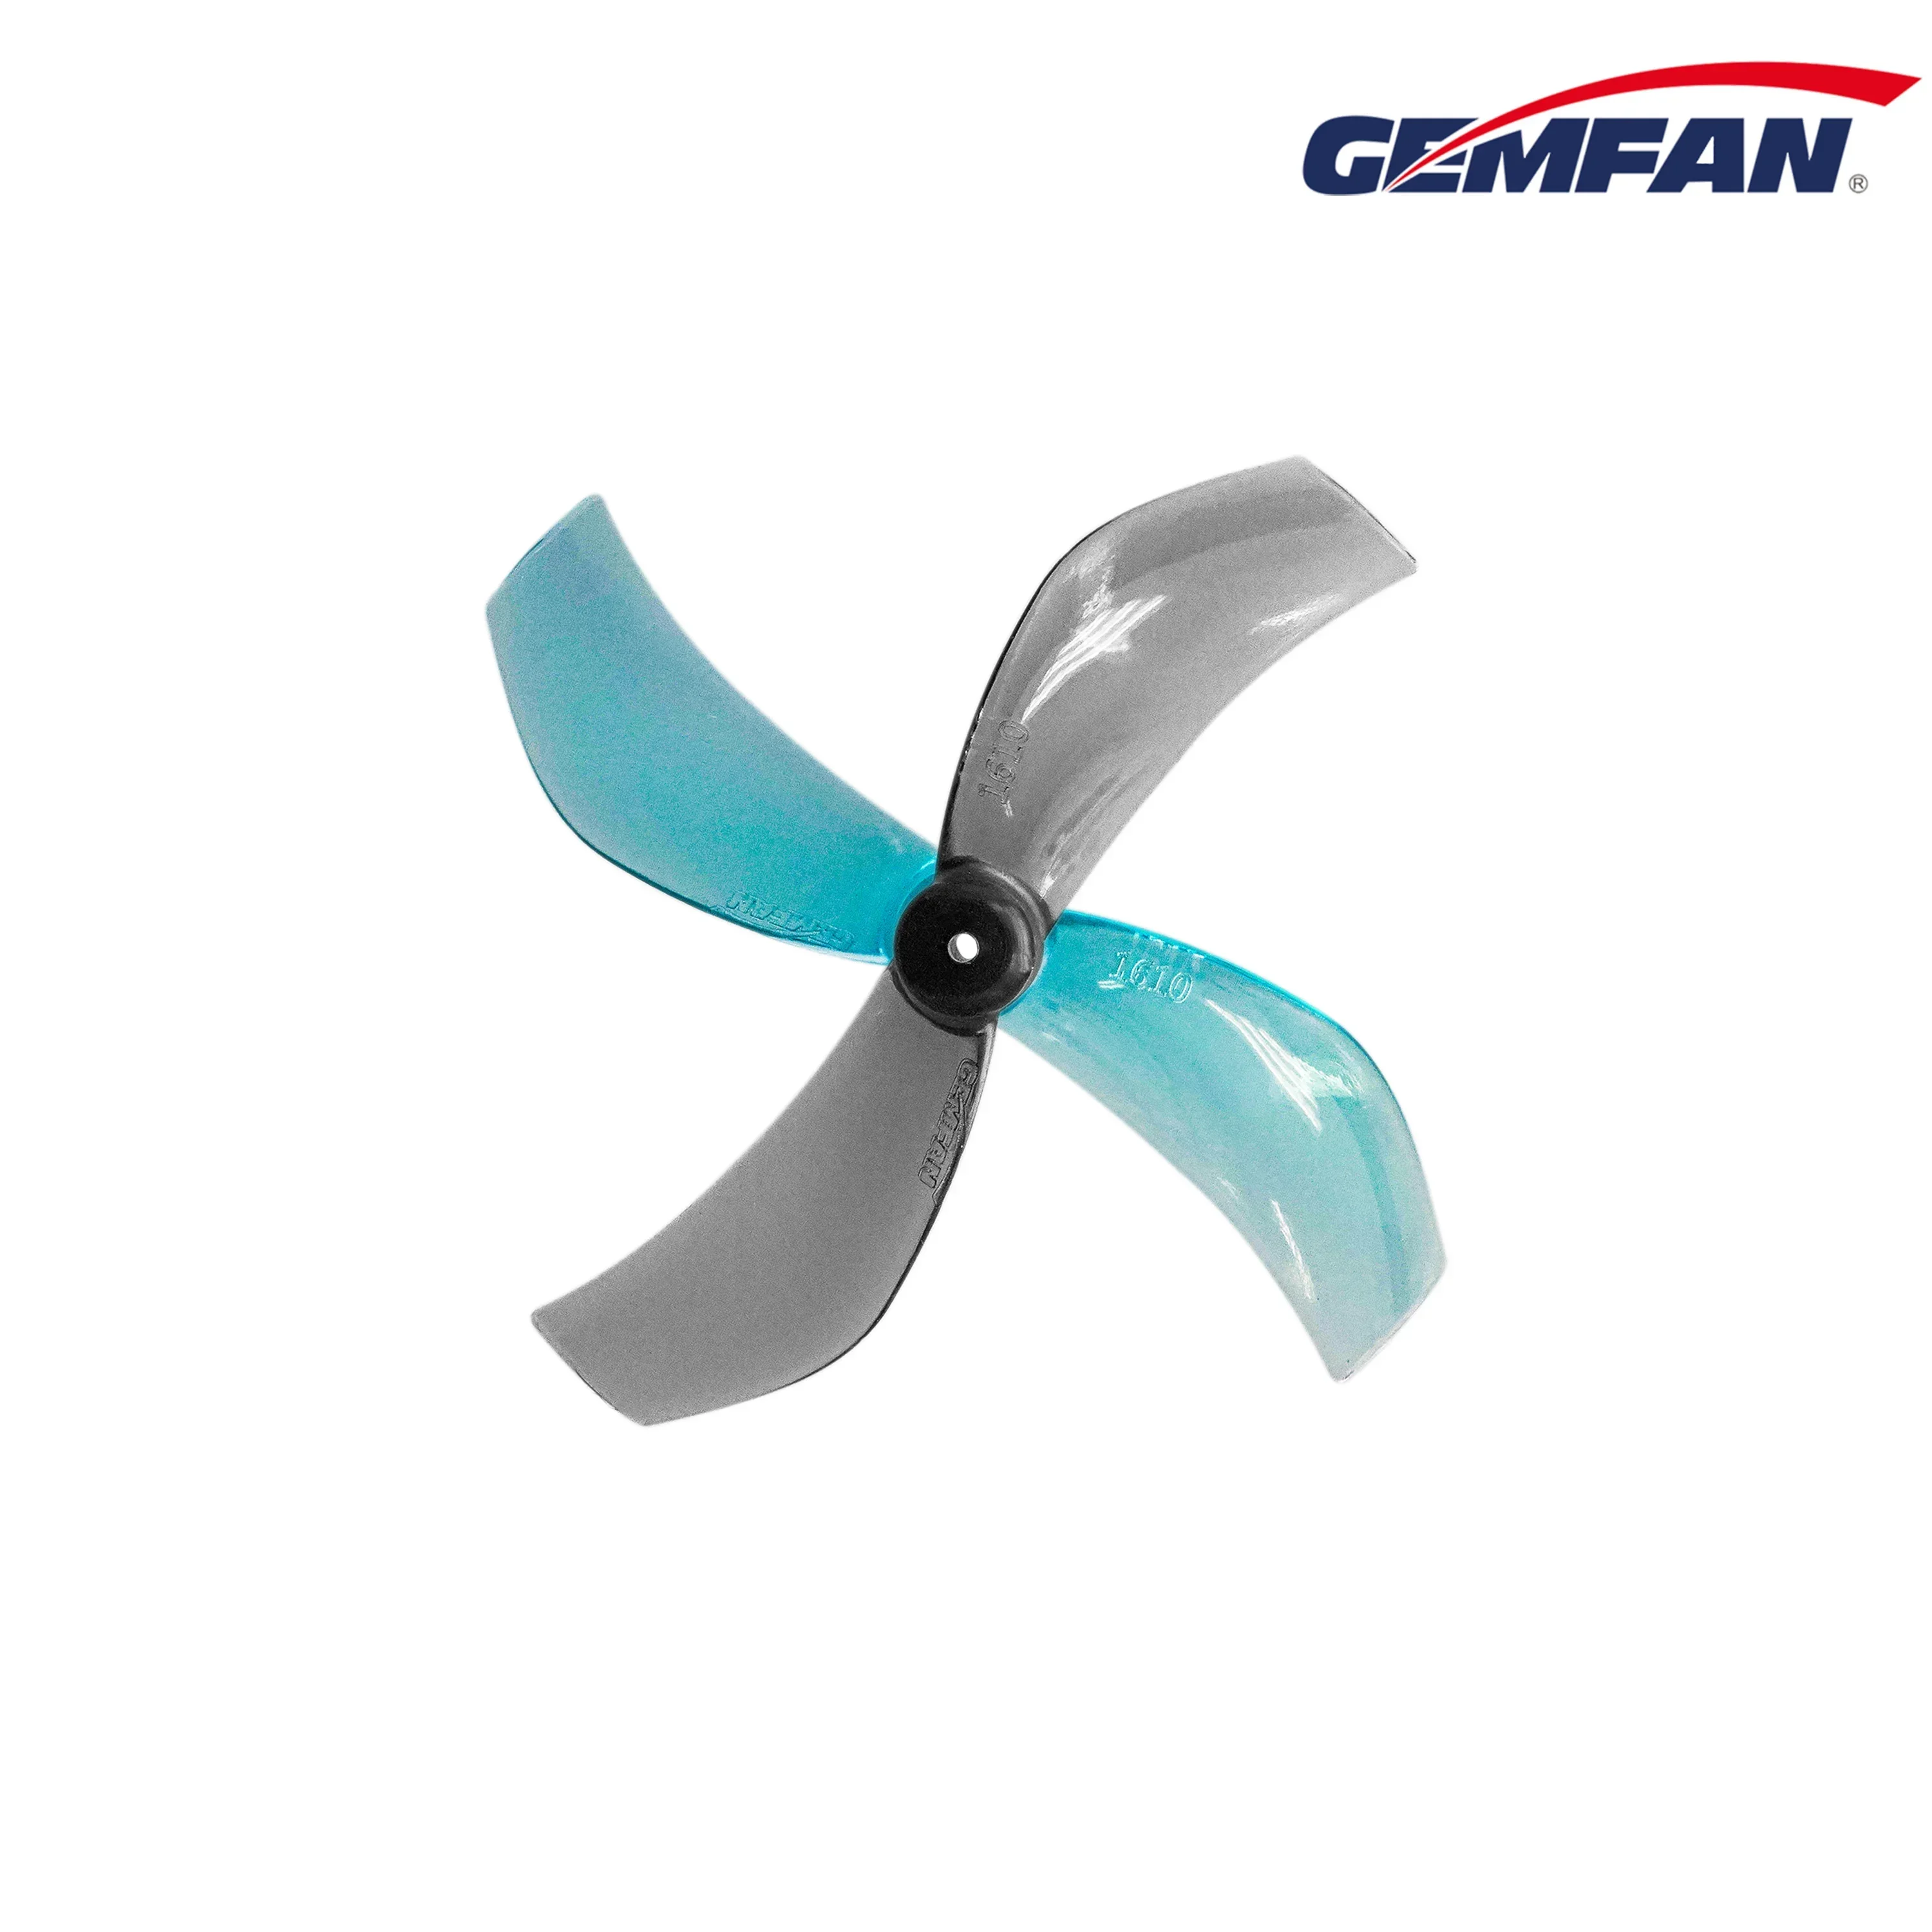 Gemfan 40MM 1610-2 Mix Color 1.5mm propeller